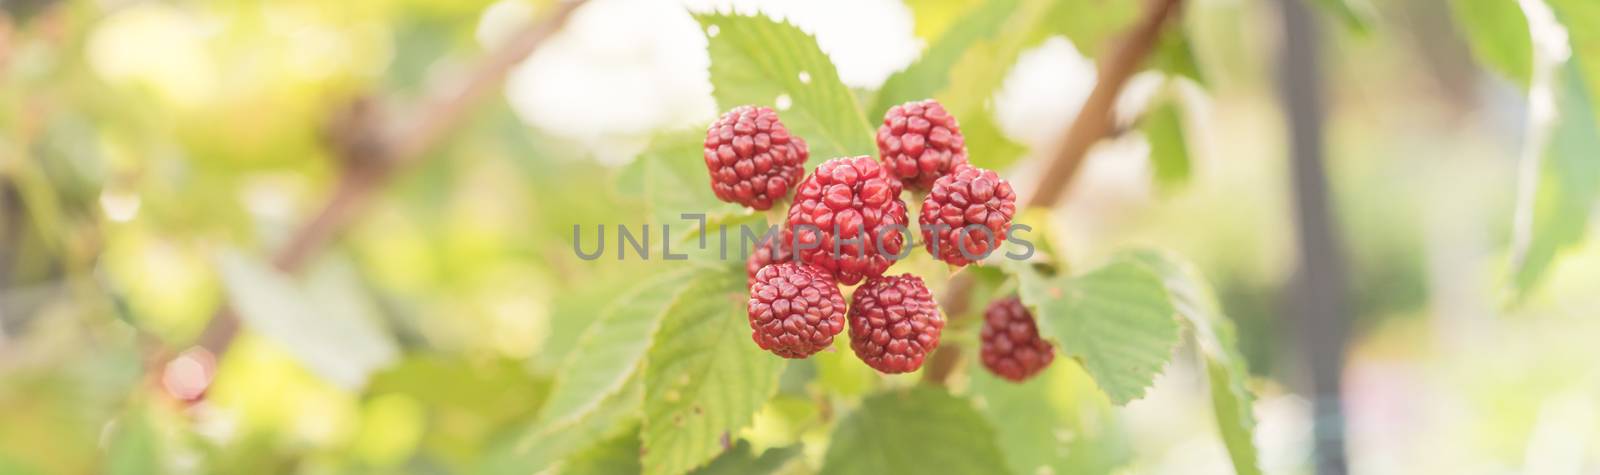 Panoramic group of organic unripe blackberries growing on tree in Texas, America by trongnguyen